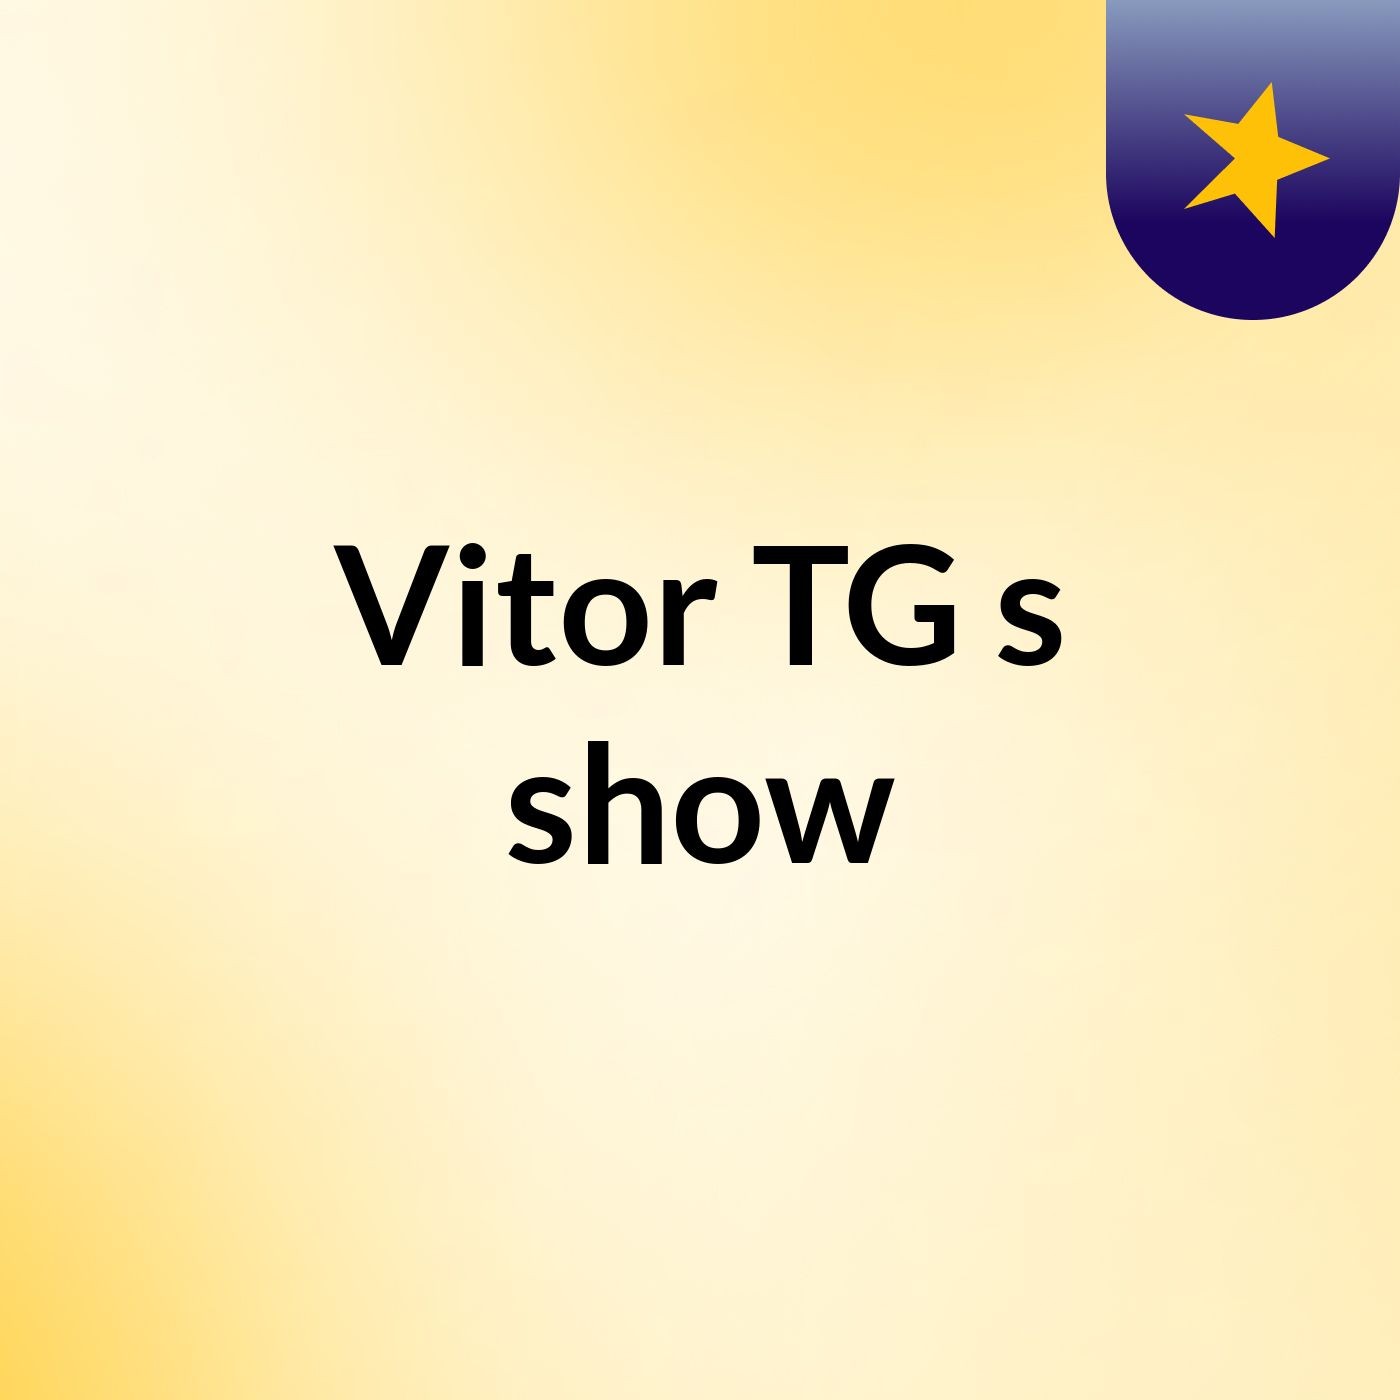 Vitor TG's show